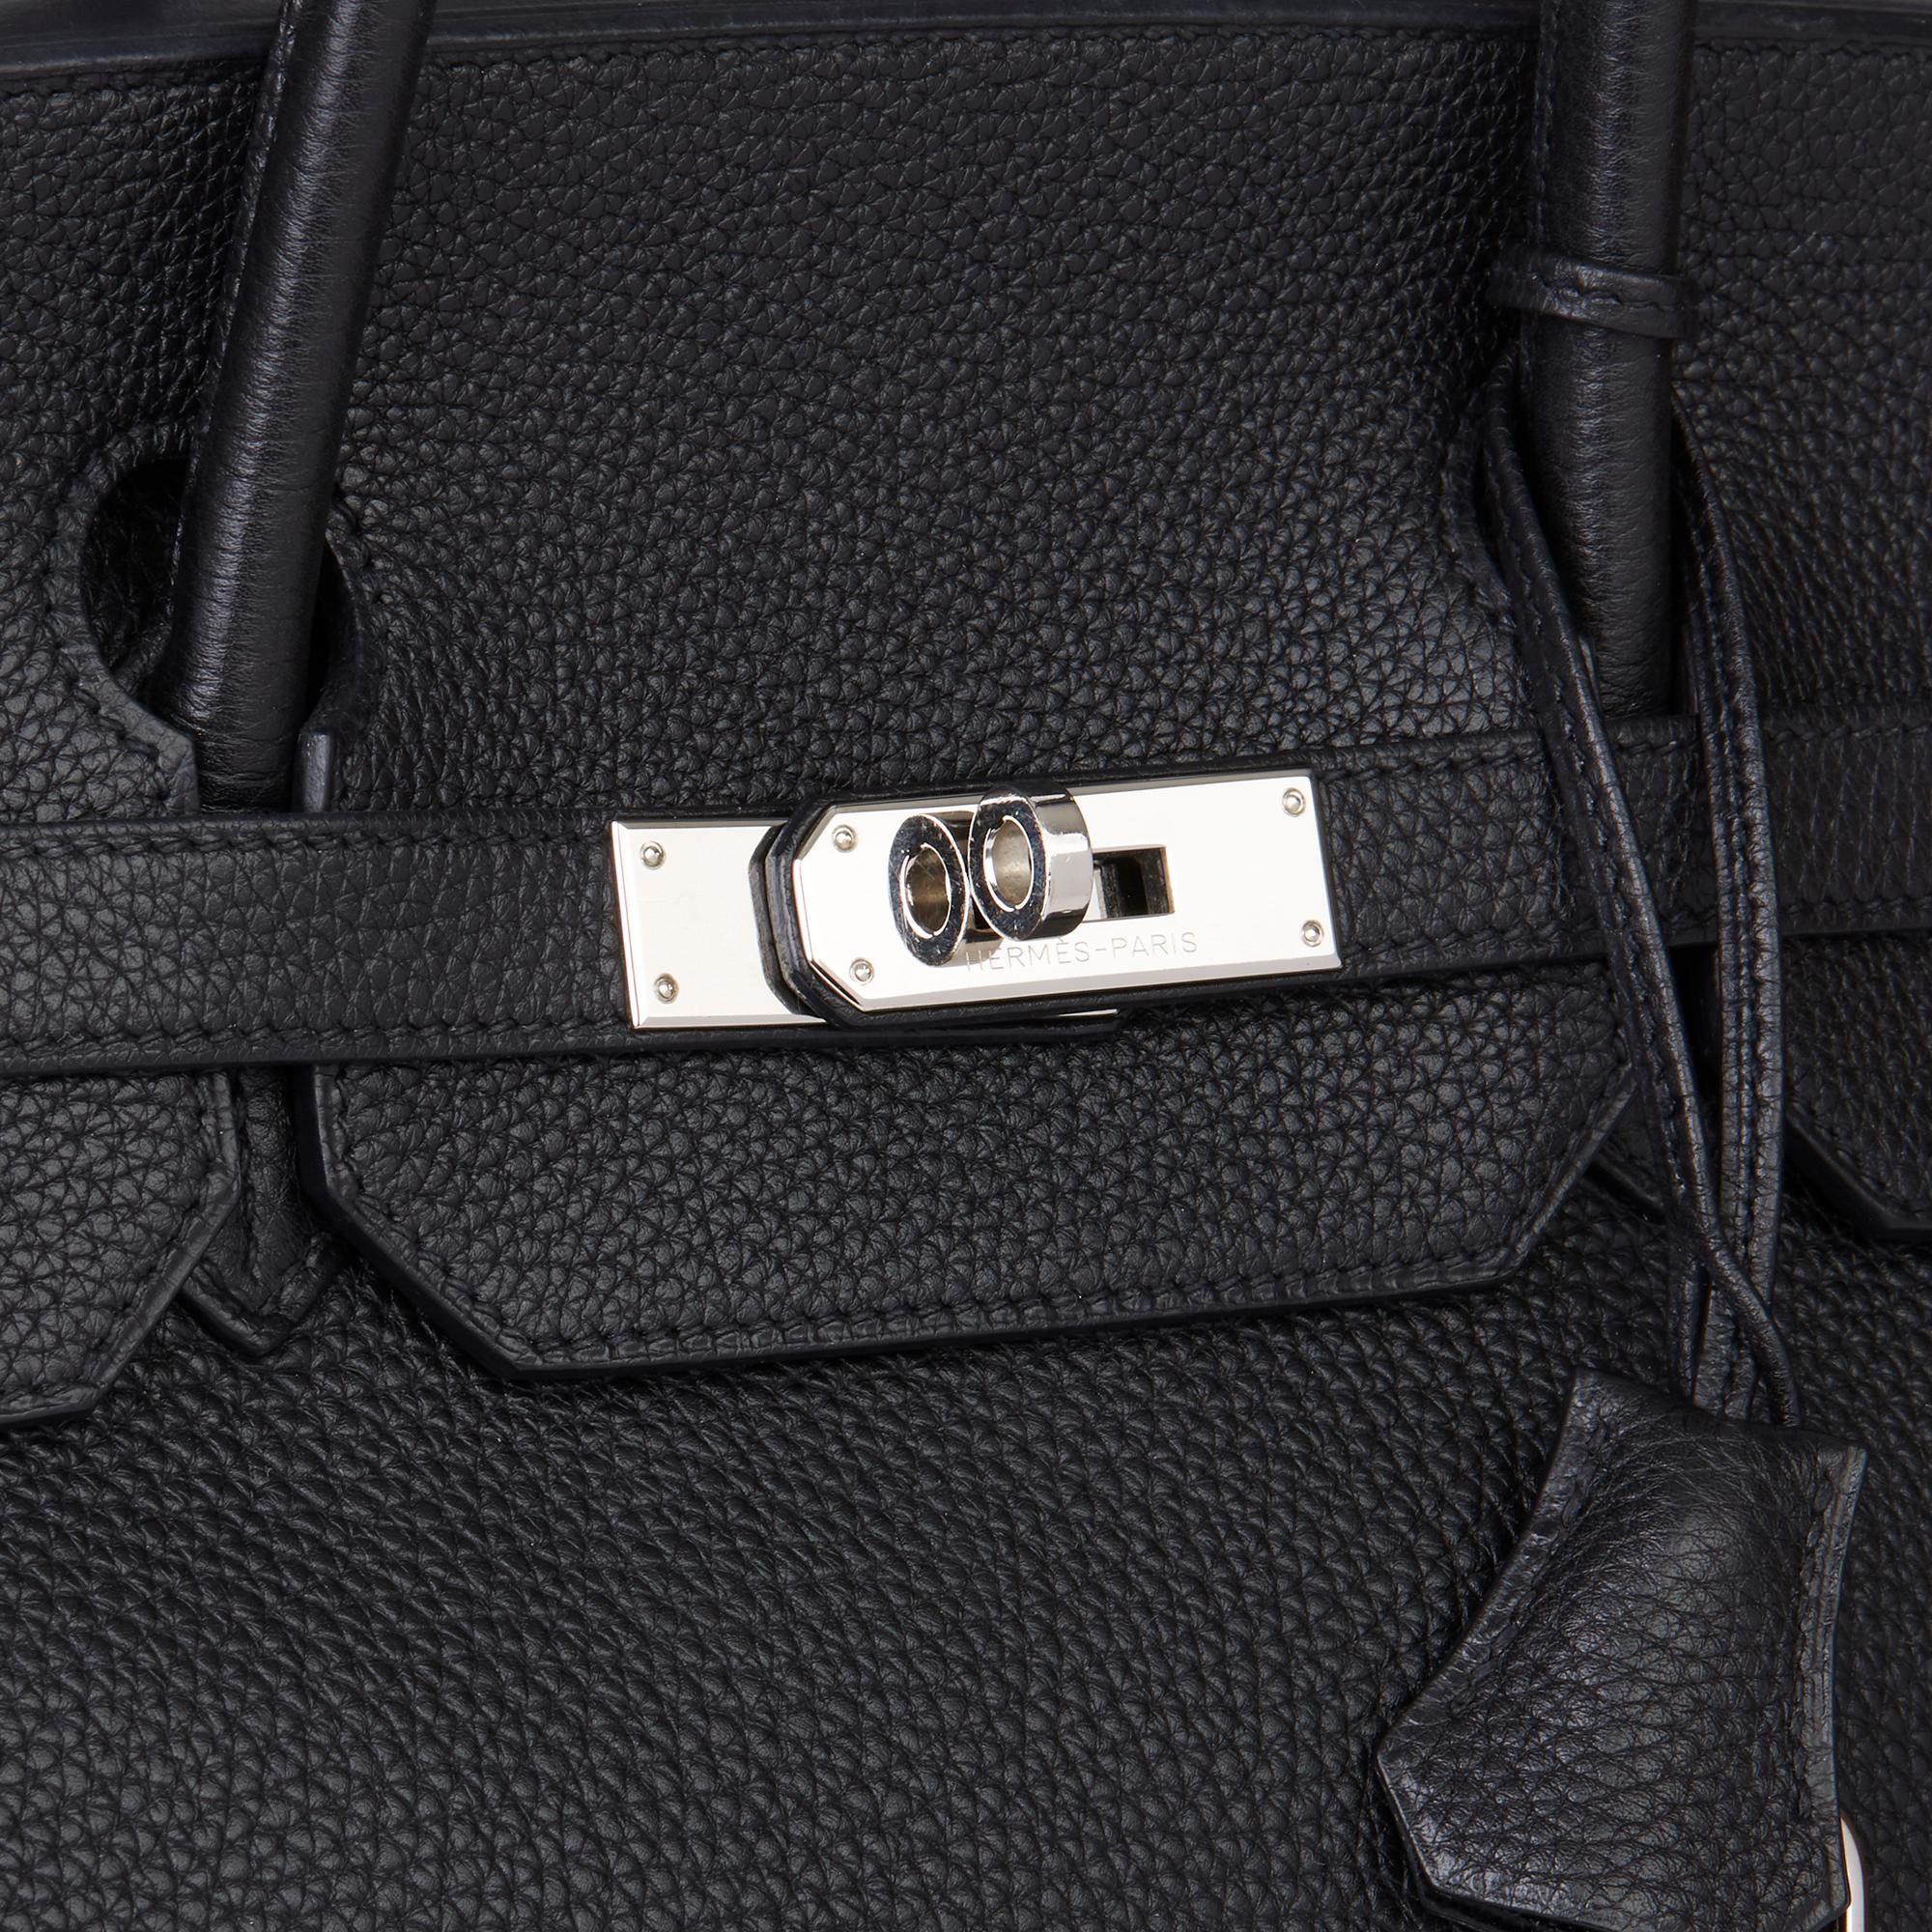 2010 Hermès Black Togo Leather Birkin 40cm 3